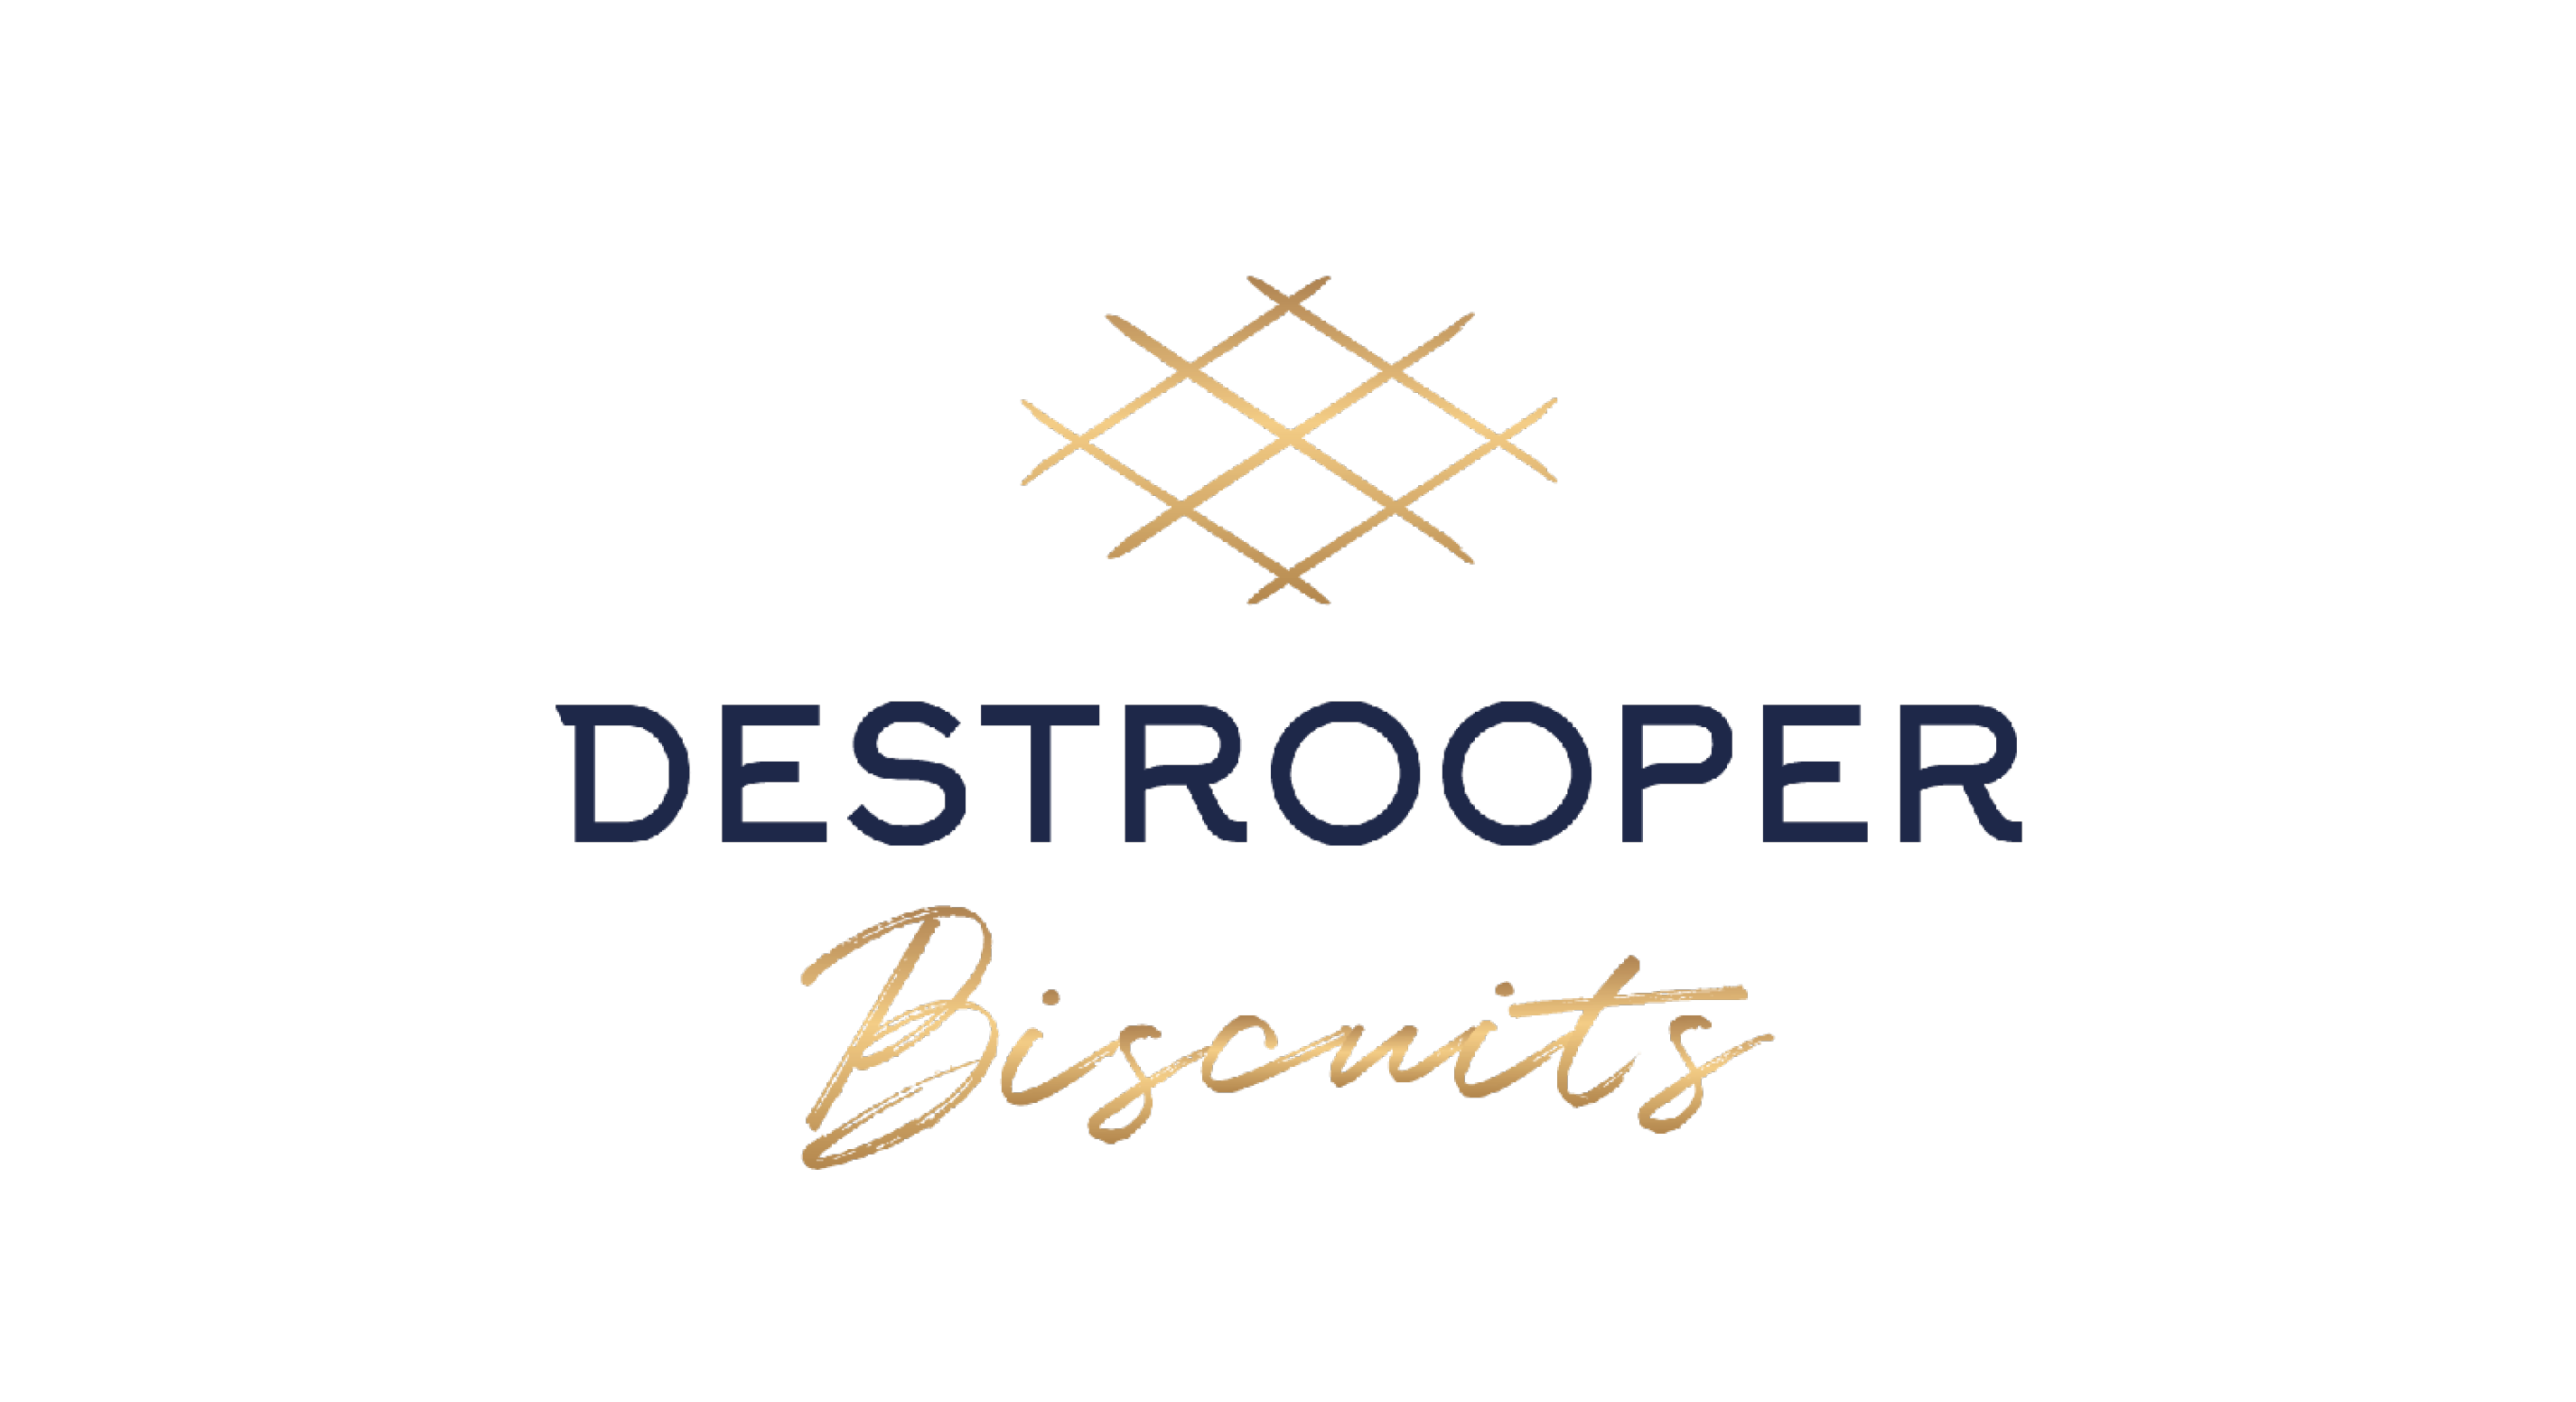 Destrooper Biscuits logo